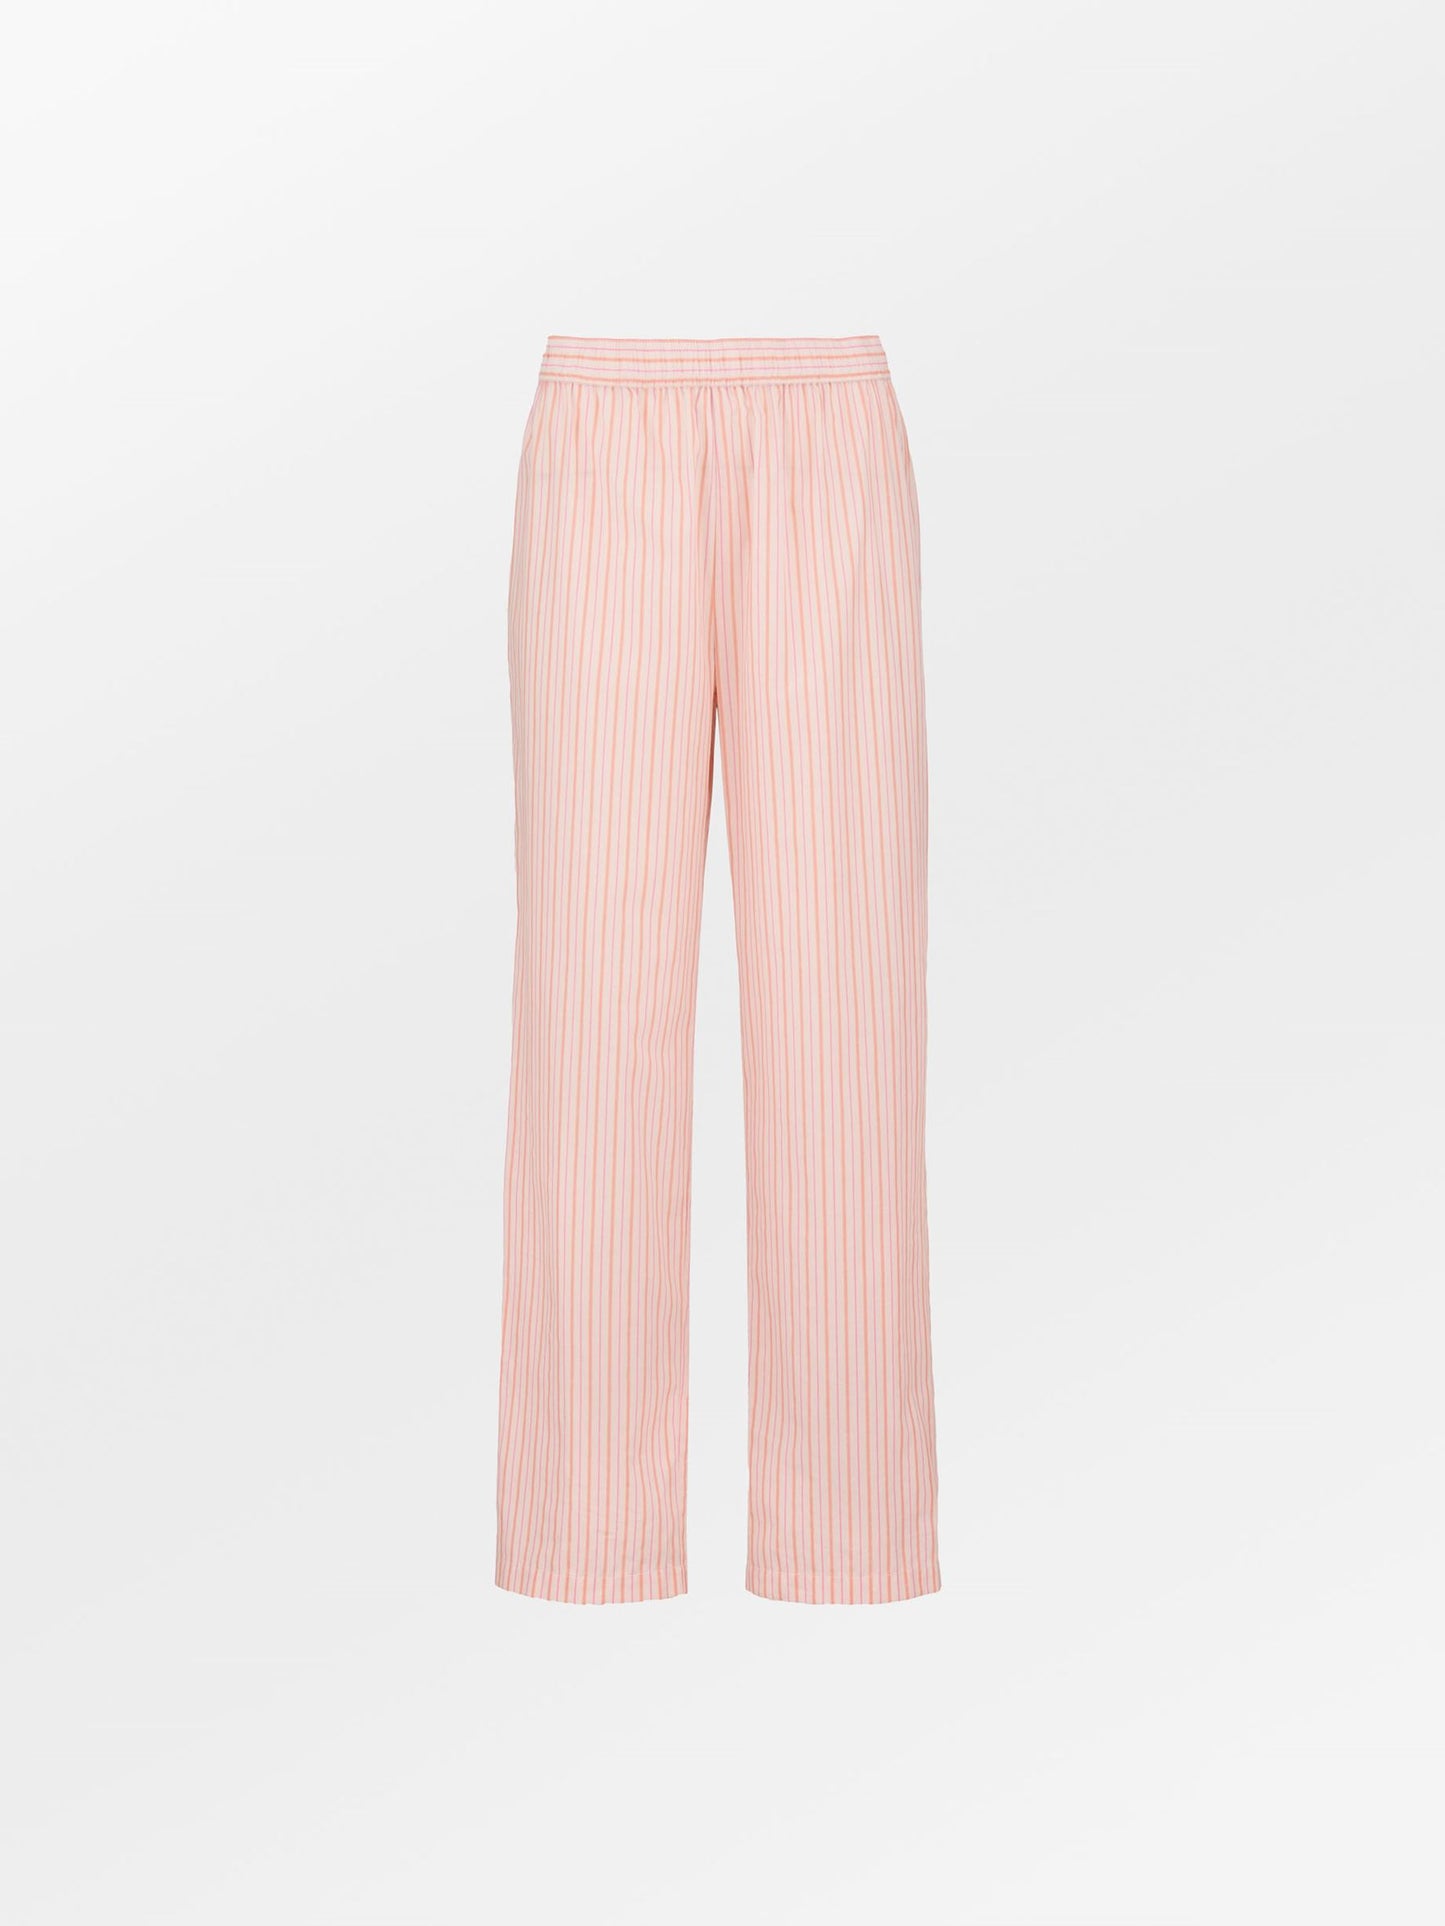 Stripel Pants - Pink Clothing   BeckSöndergaard